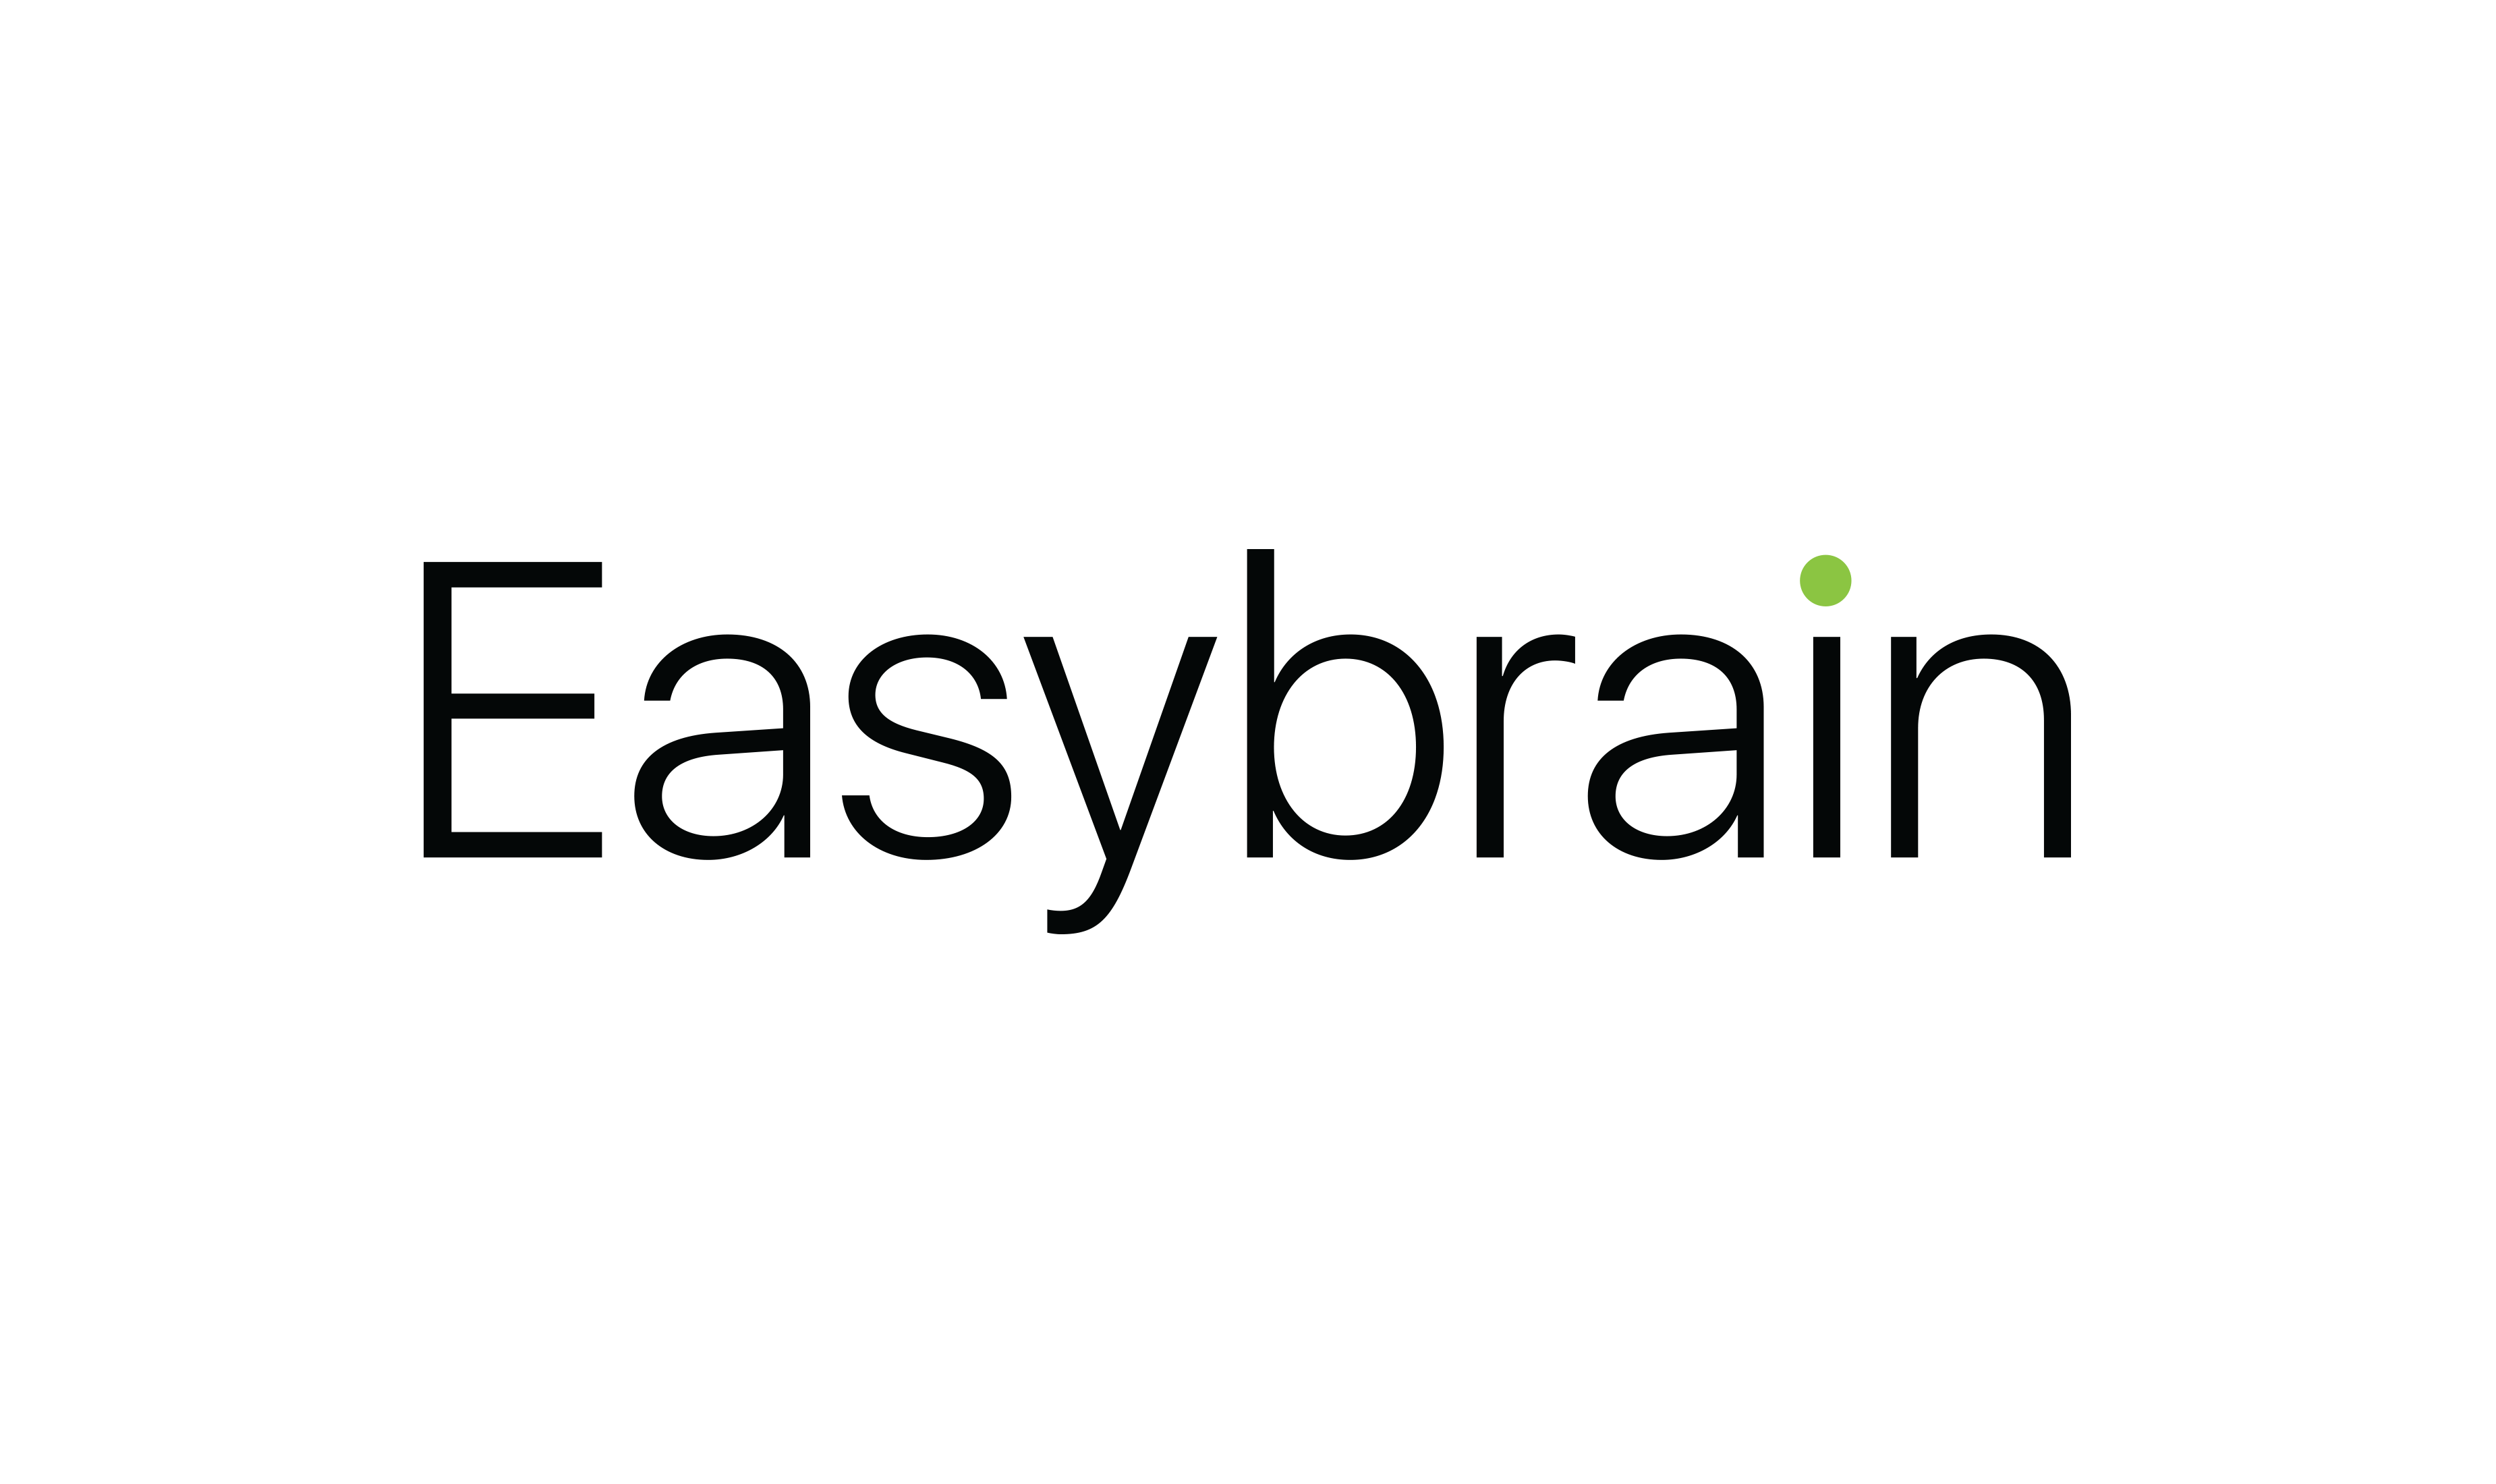 Easybrain - Simple Mobile Experiences